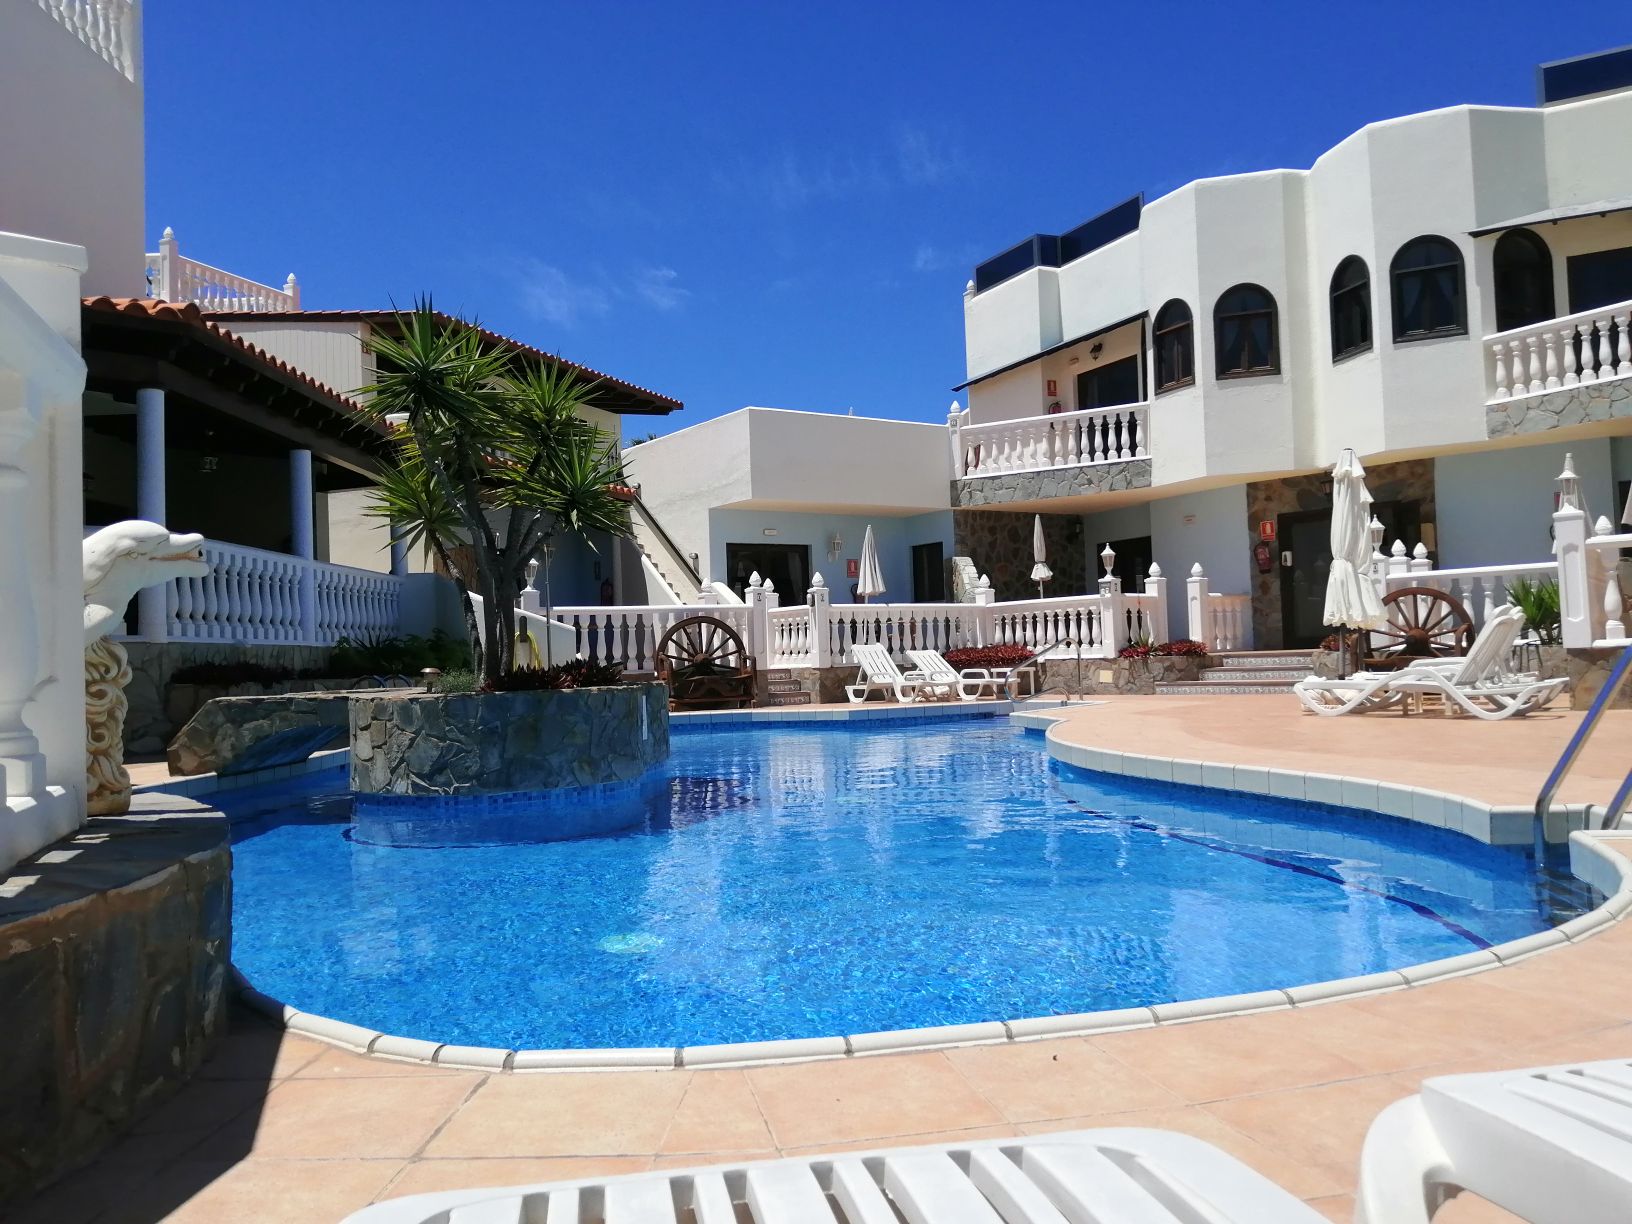 Villa with jacuzzi, swimming pool, sauna, terrace - Villas for Rent in  Corralejo, Canarias, Spain